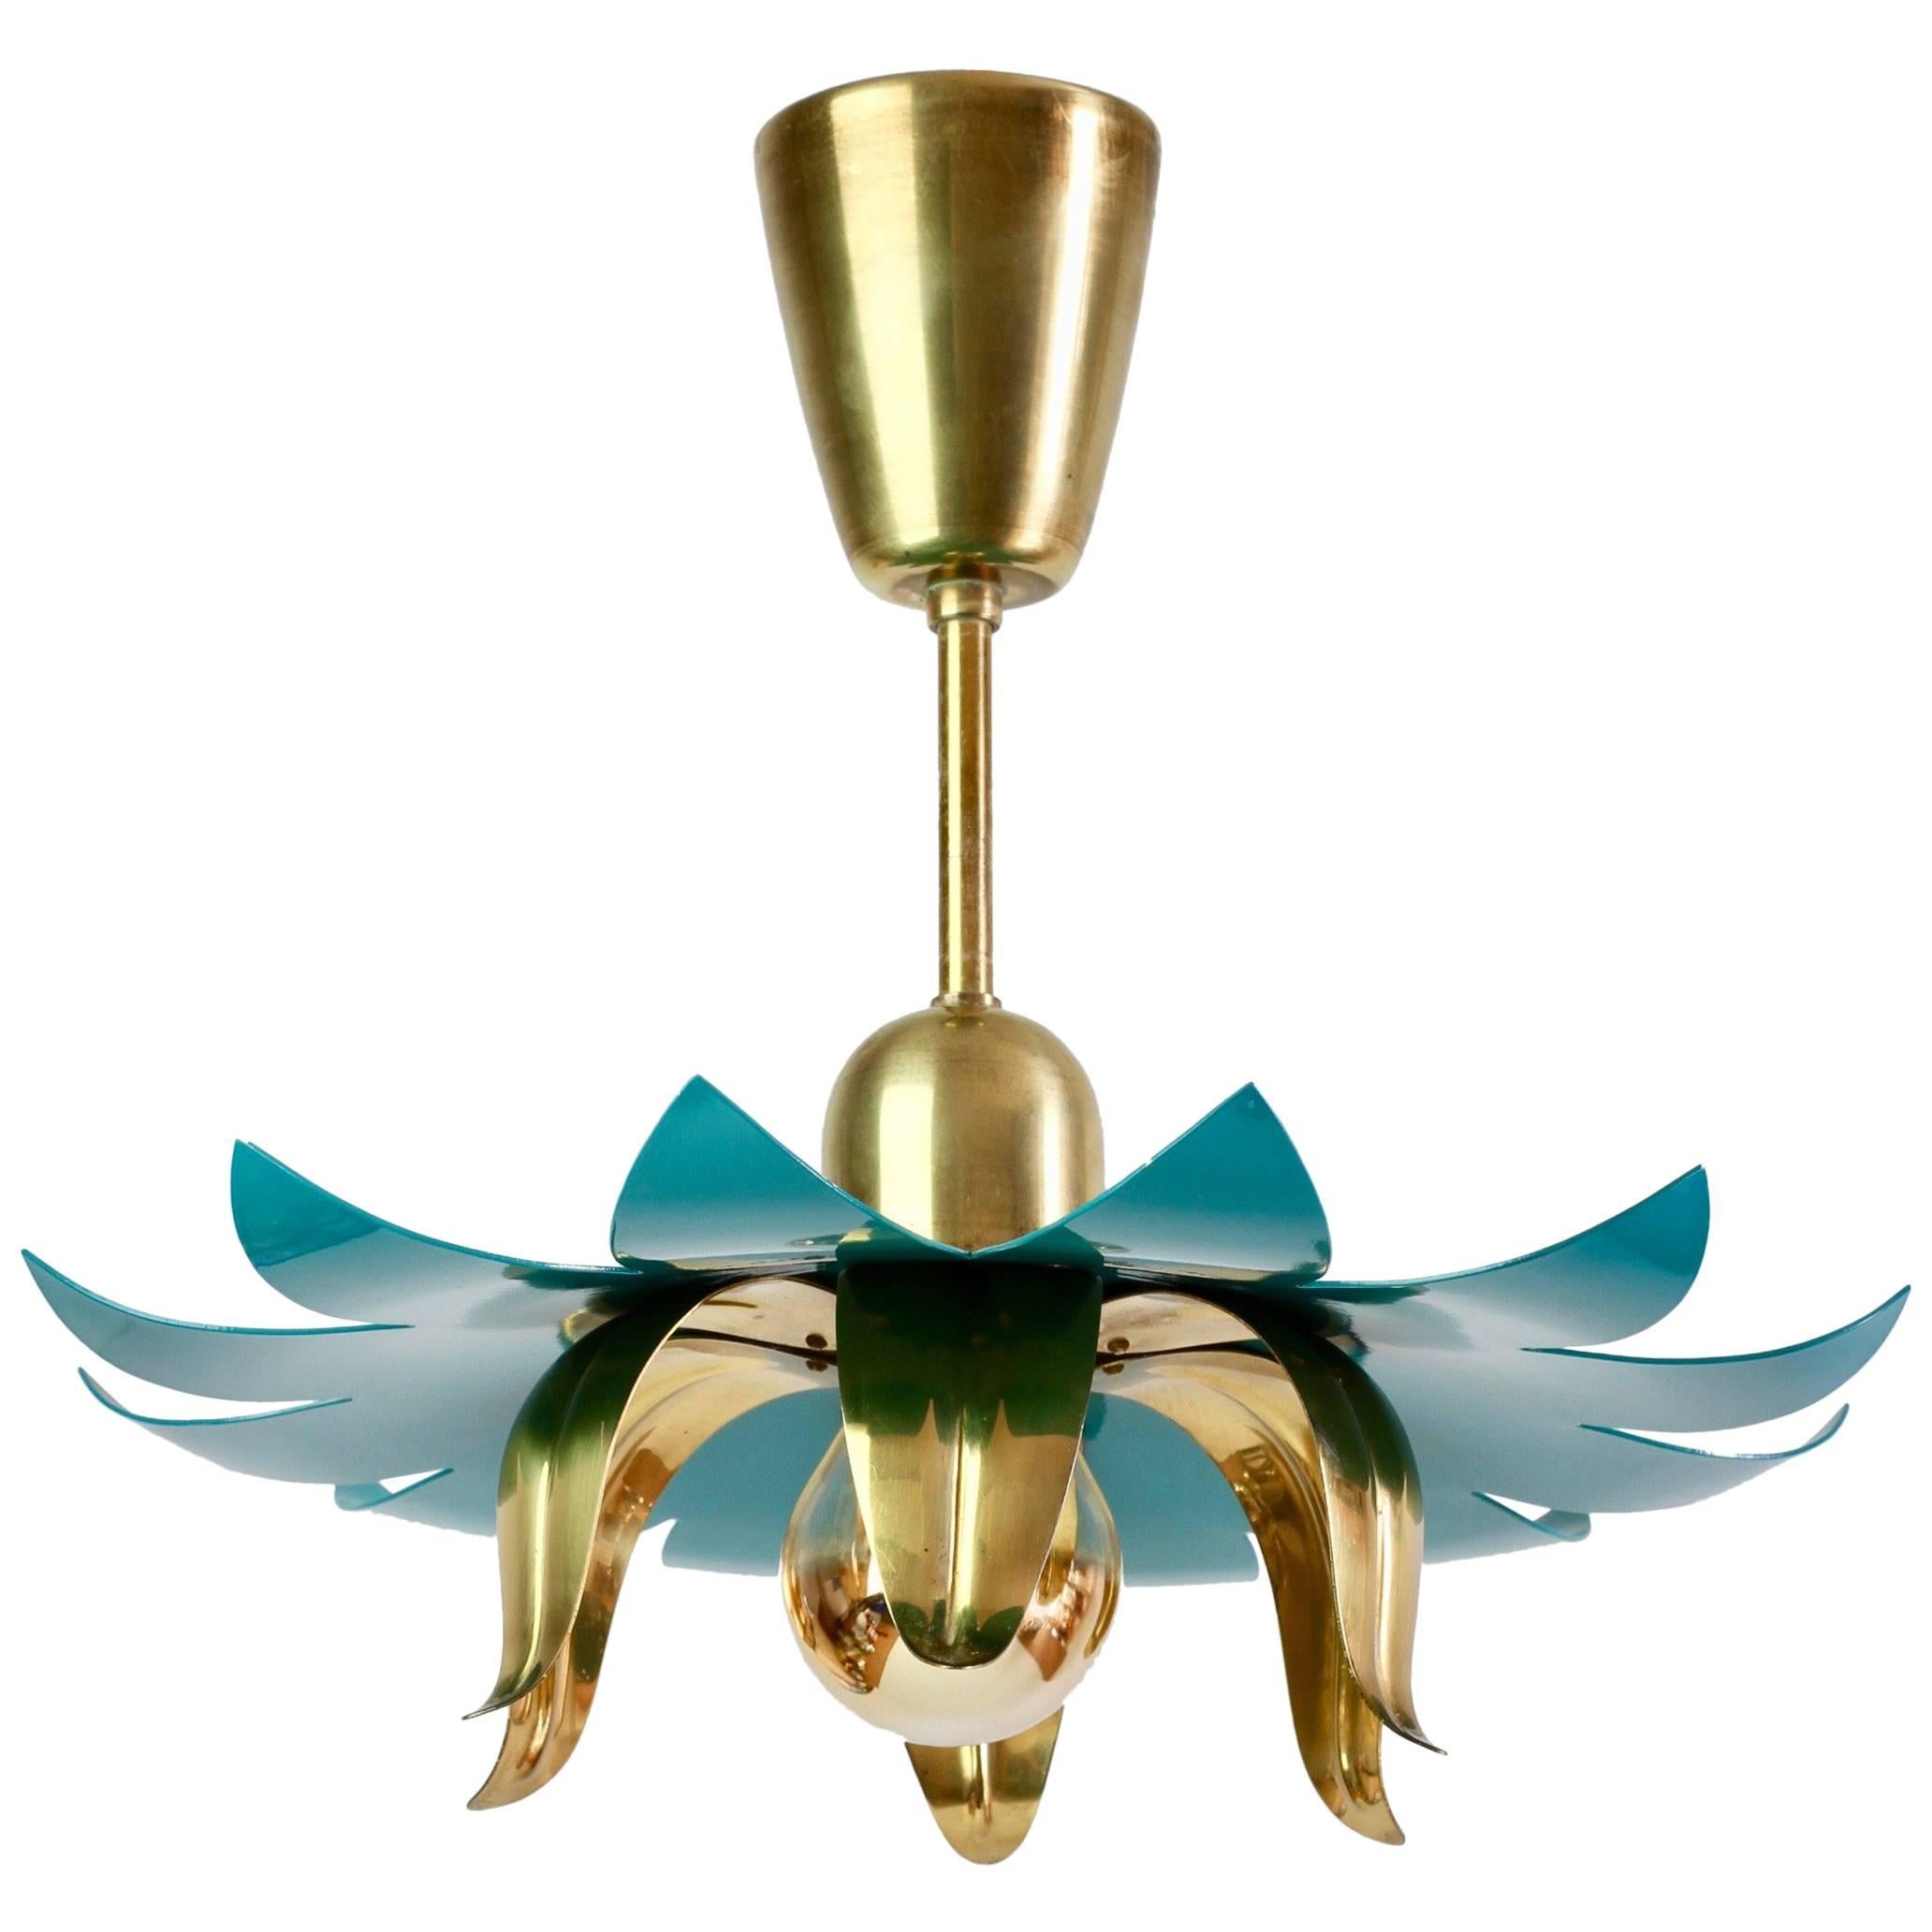 1950s Italian Stilnovo Style Brass and Turquoise Flower Pendant Light Fixture